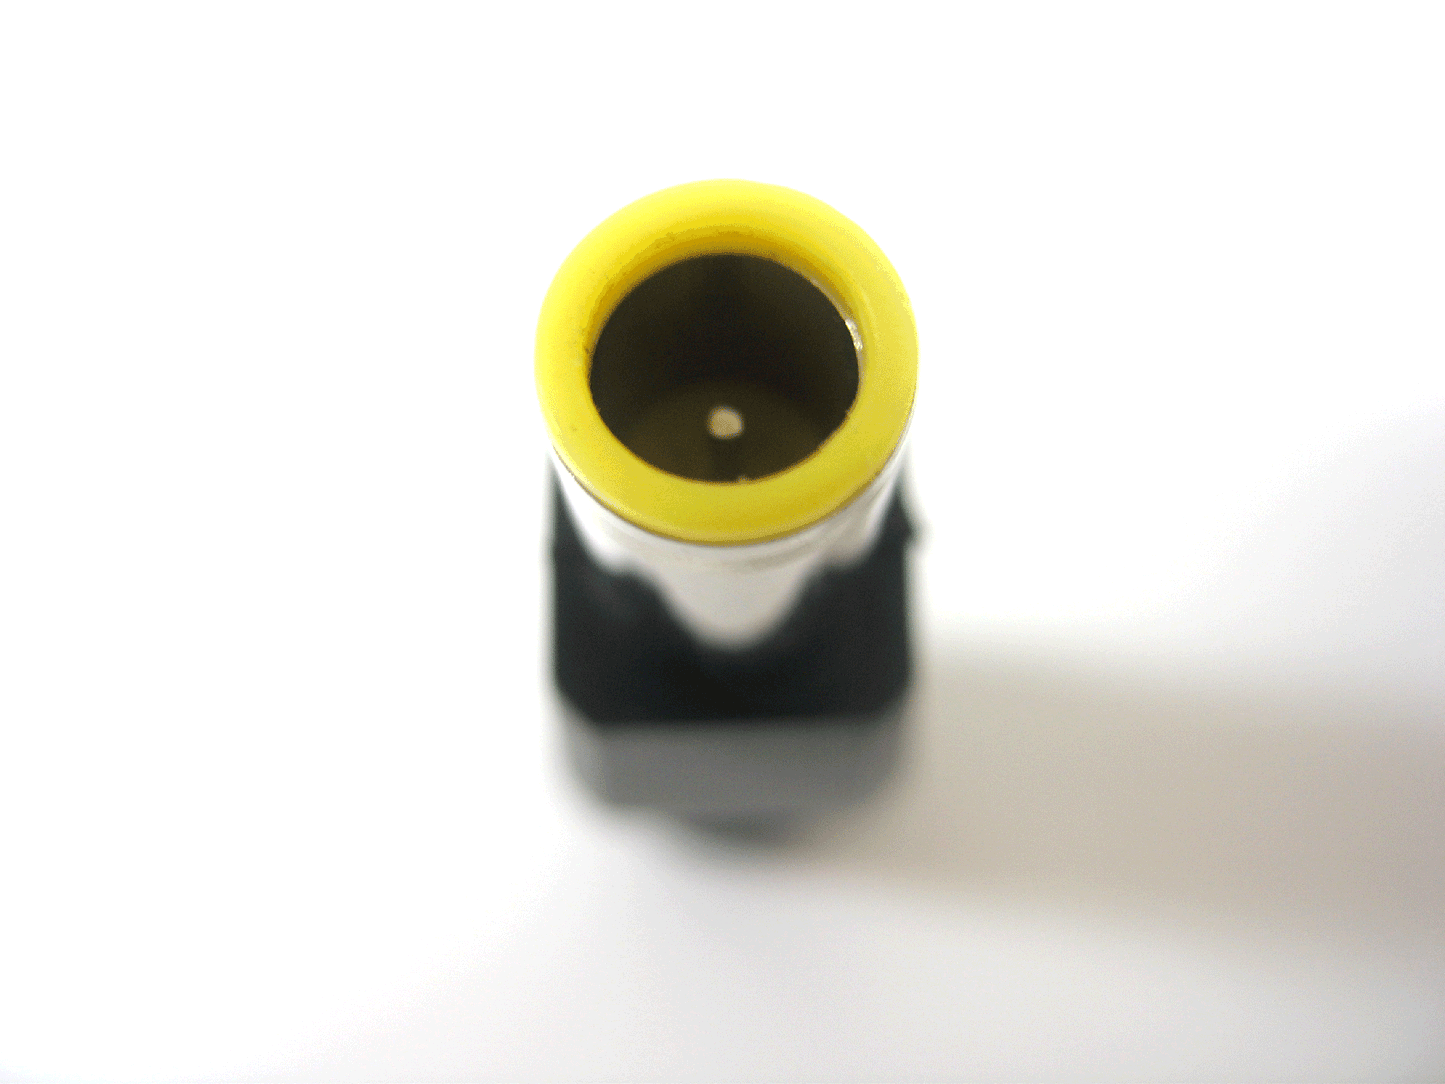 2.1mm x 5.5mm to 7.9mm Yellow DC Power Plug Adaptor